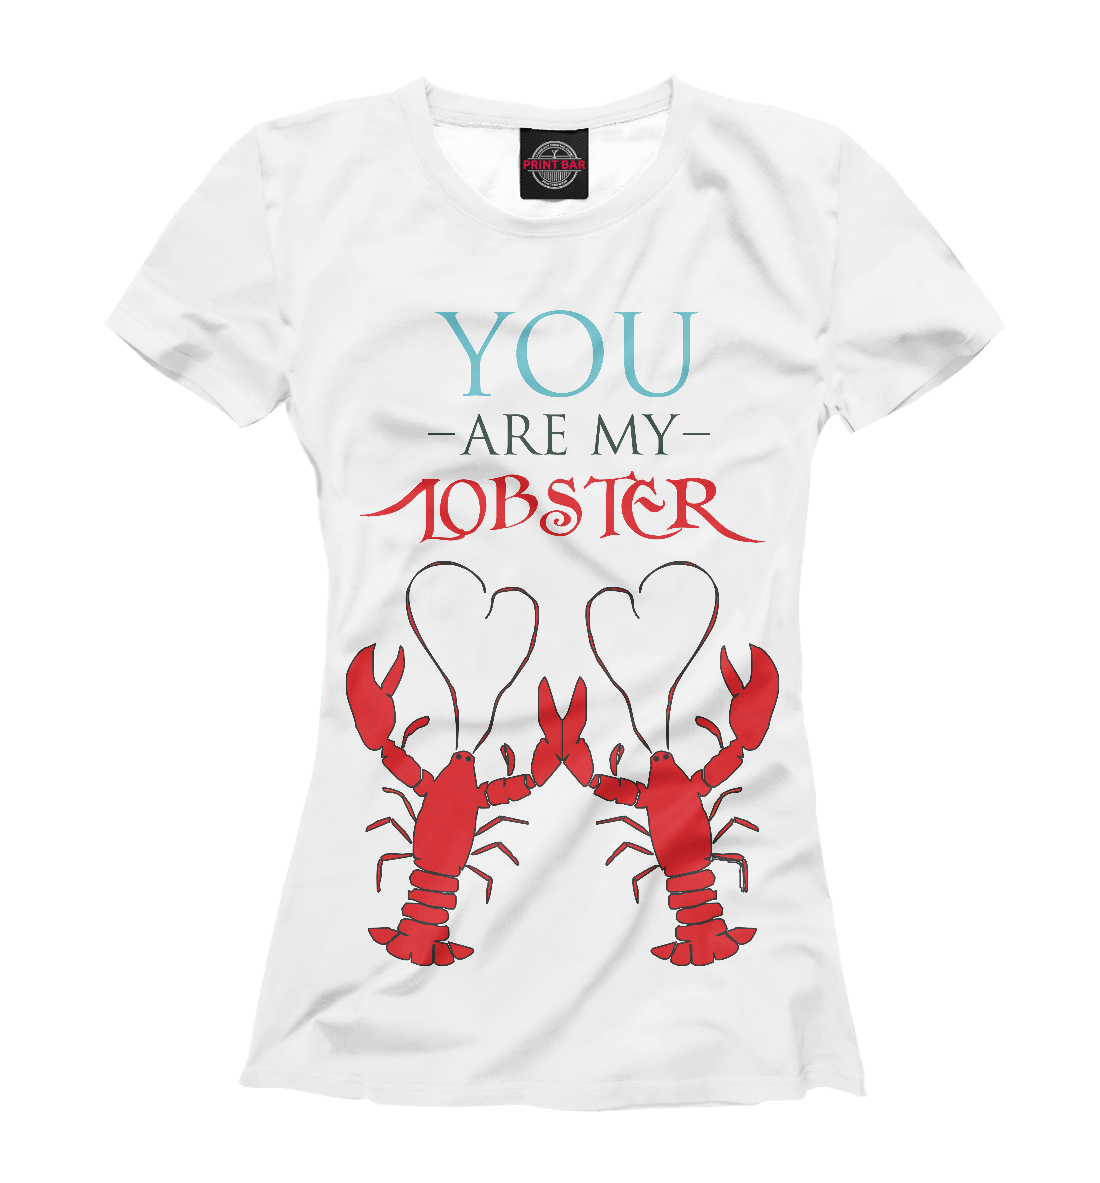 Женская Футболка с принтом You are my lobster, артикул 14F-969615-fut-1mp